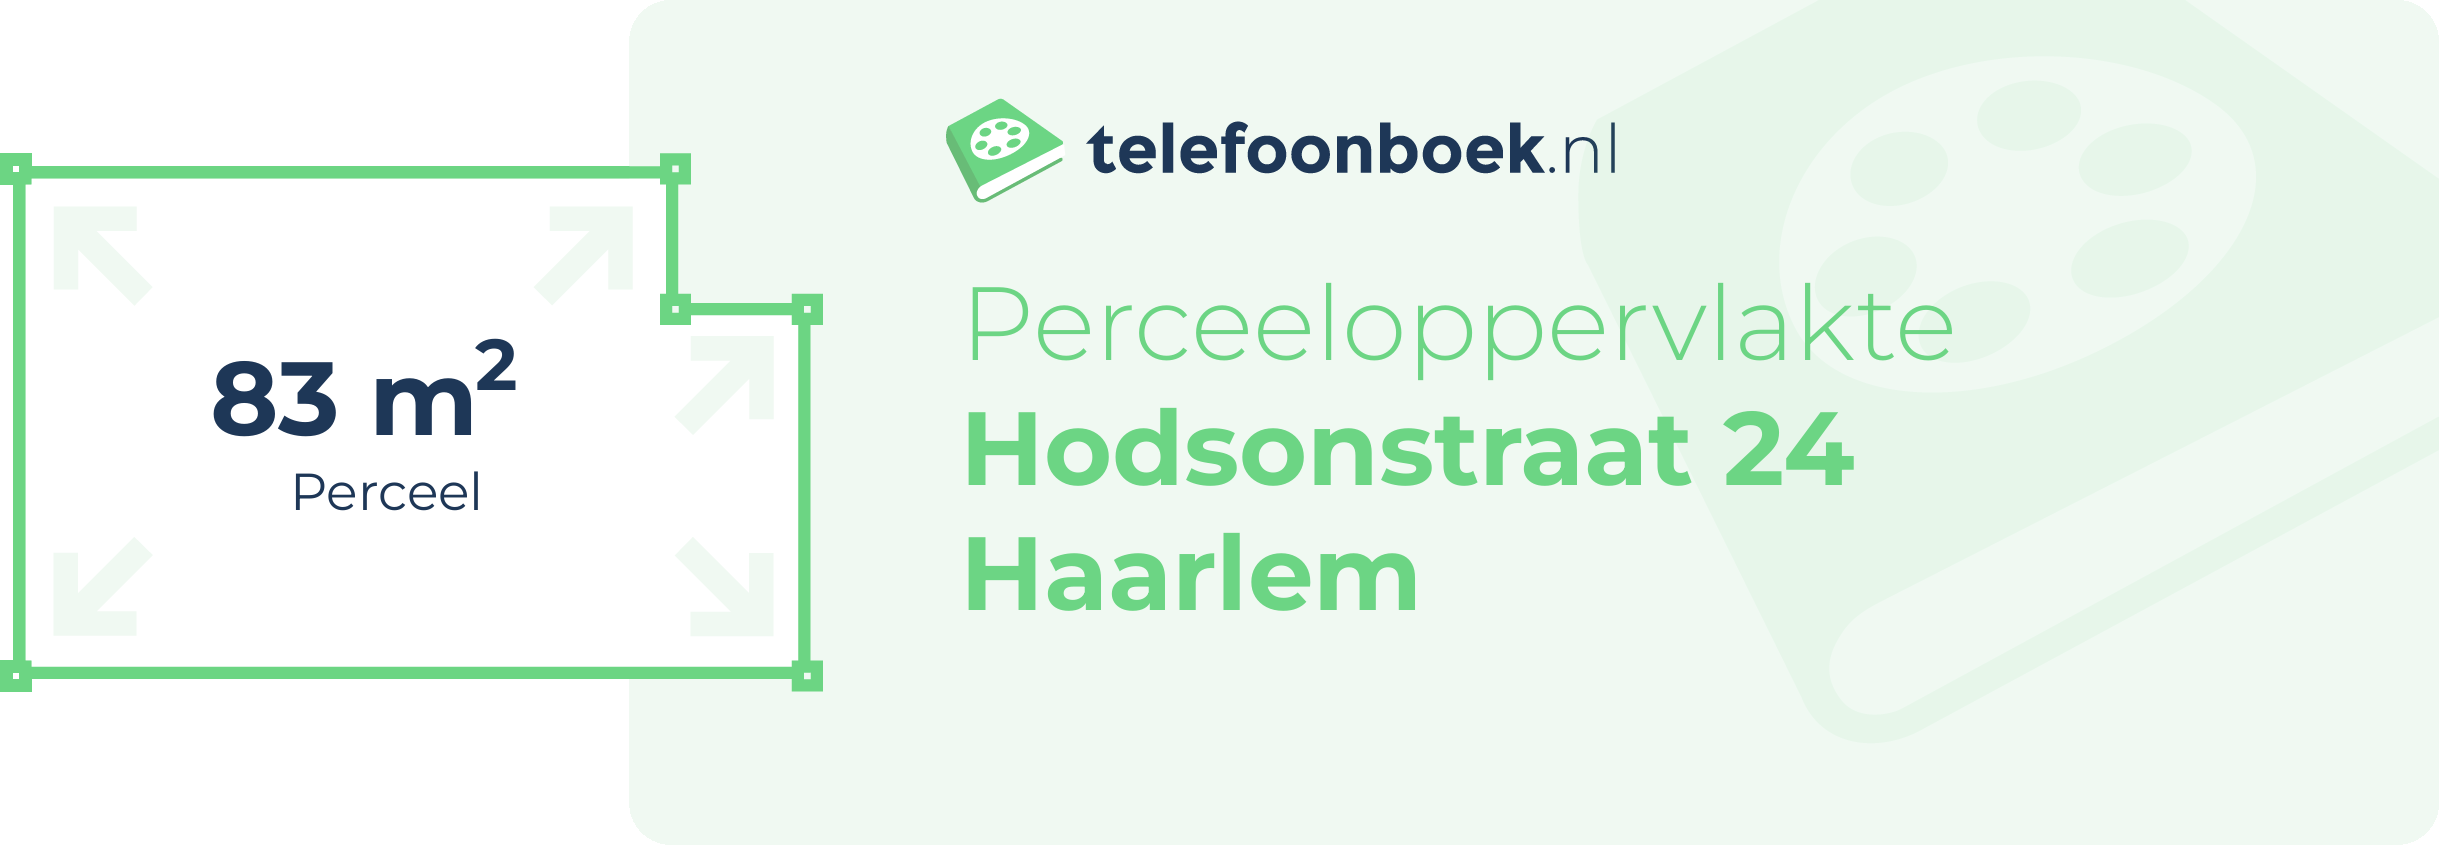 Perceeloppervlakte Hodsonstraat 24 Haarlem